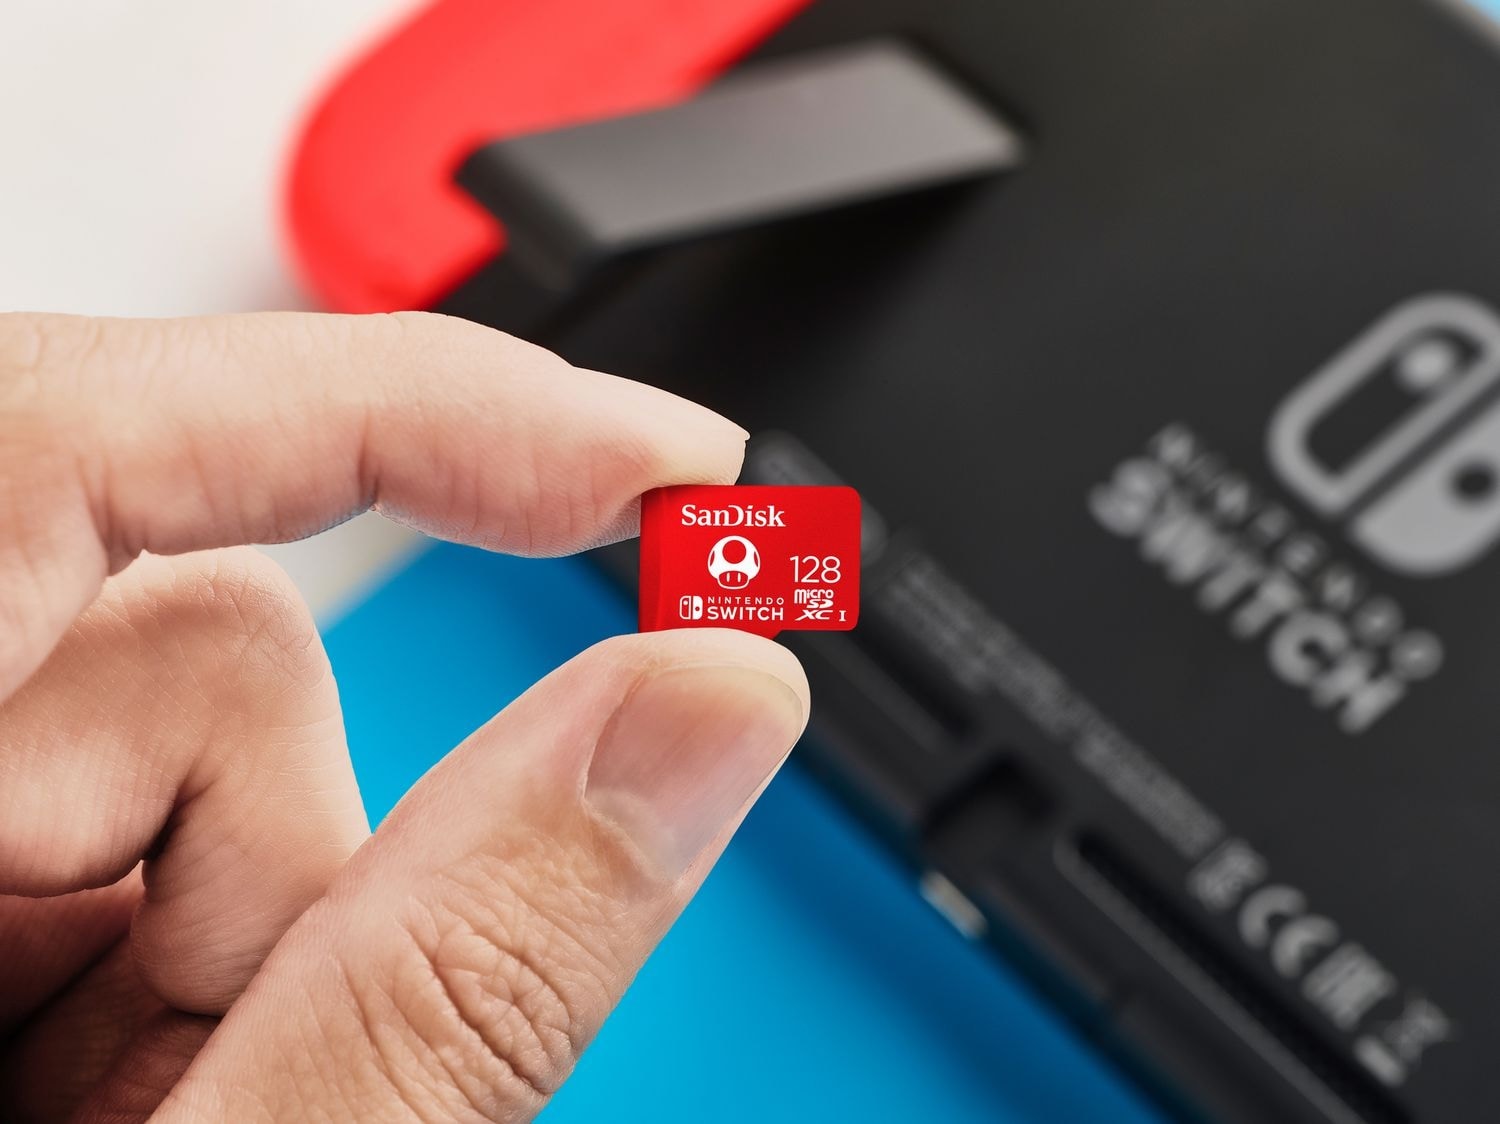 Nintendo Switch : Une mémoire interne trop juste, uitlisez une Micro SD !